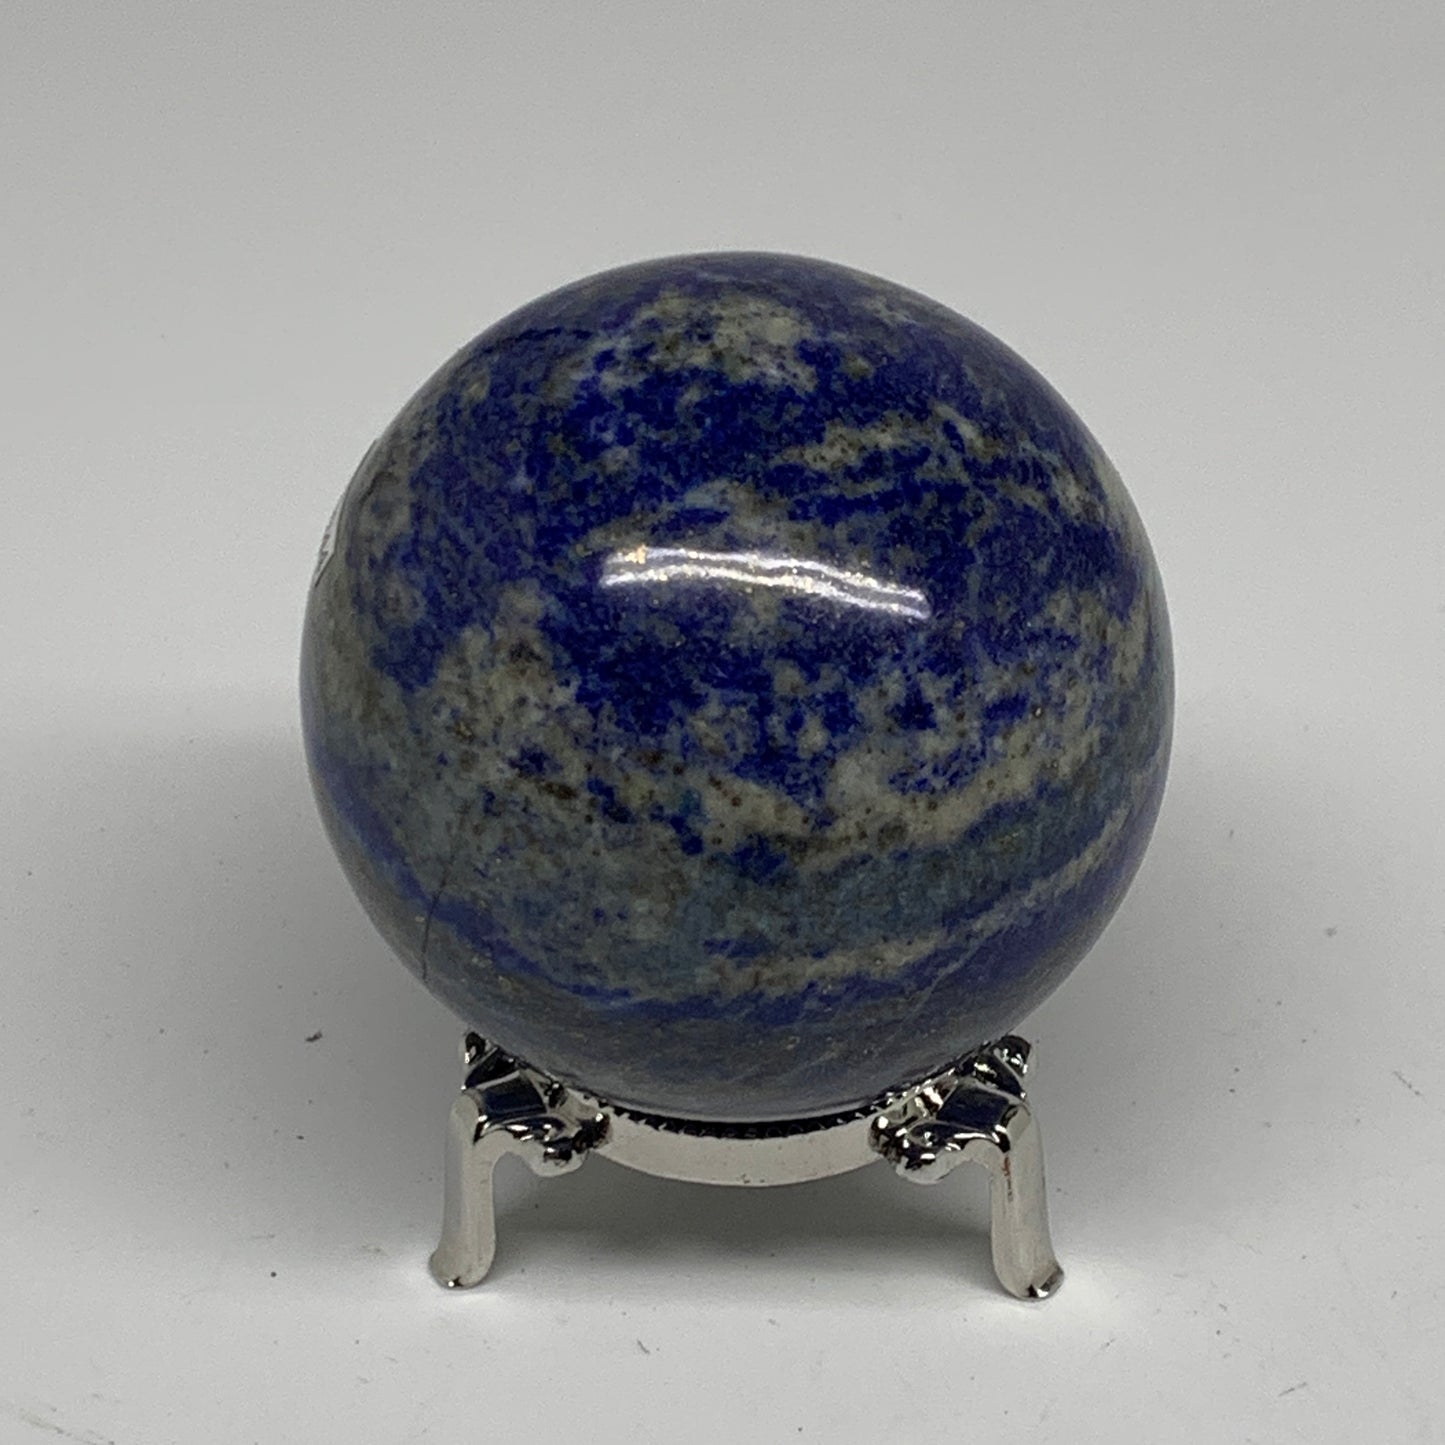 1.22 lbs, 2.8" (70mm), Lapis Lazuli Sphere Ball Gemstone @Afghanistan, B33244